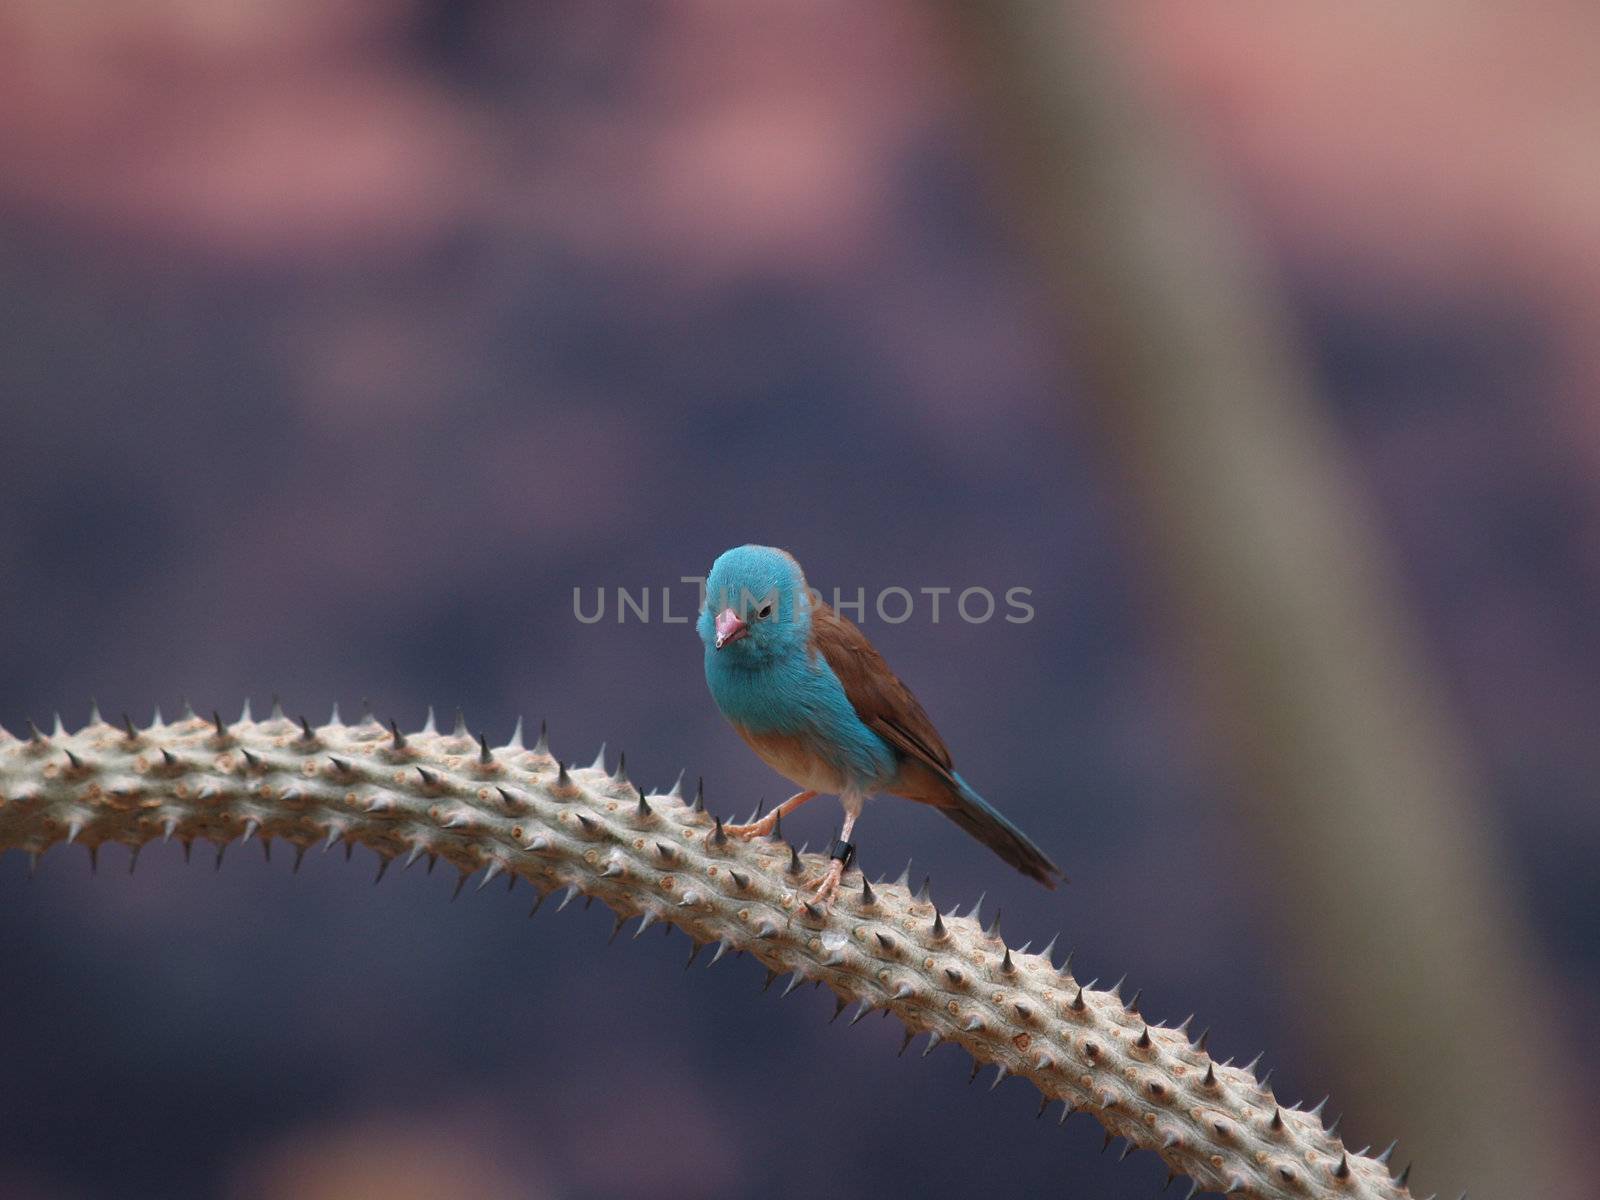 Blue tiny bird by vincentnotes